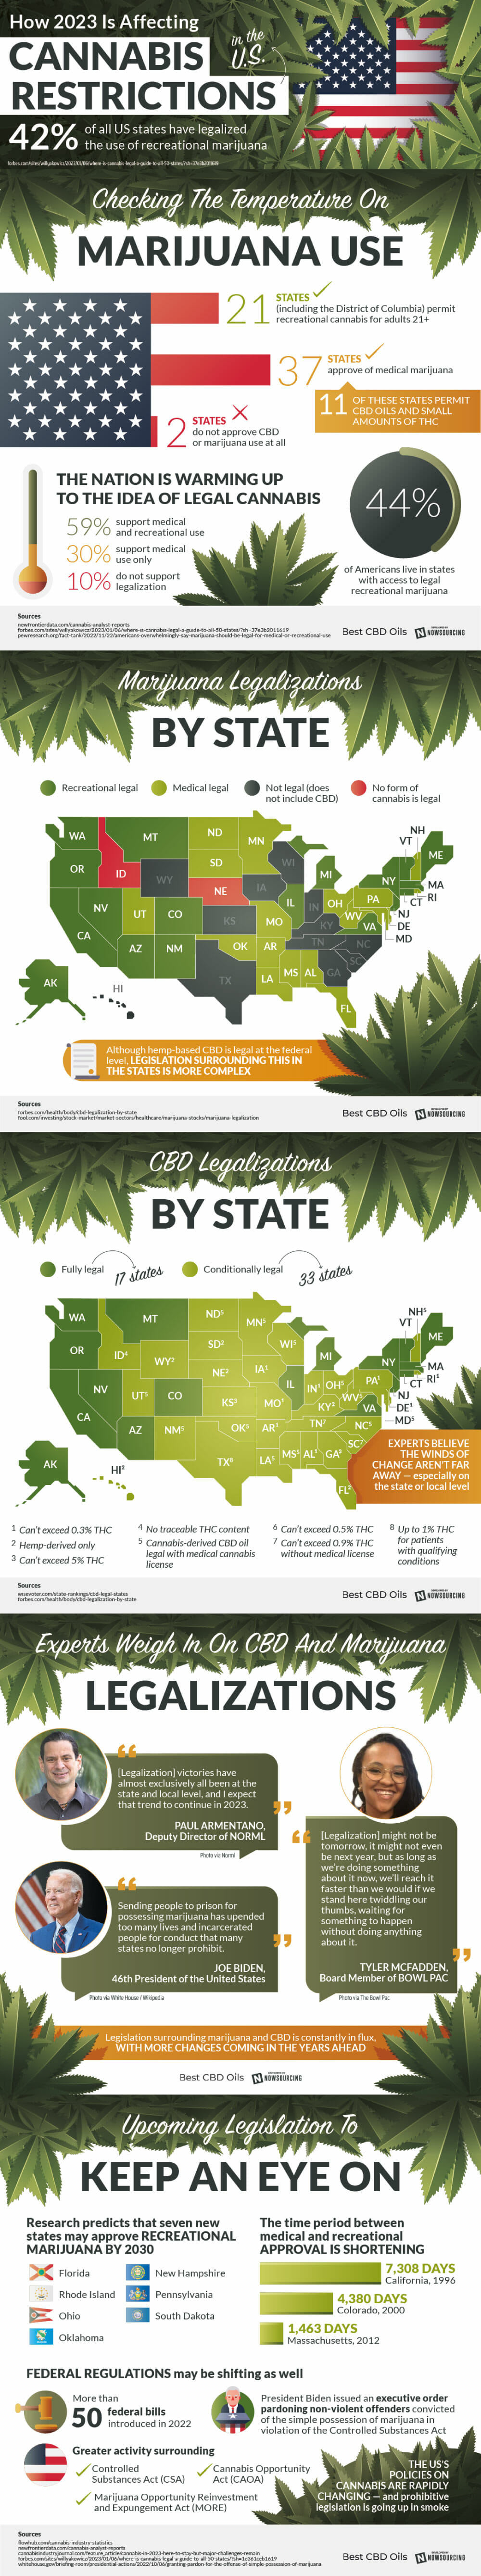 The American Cannabis Industry And Legislation IG